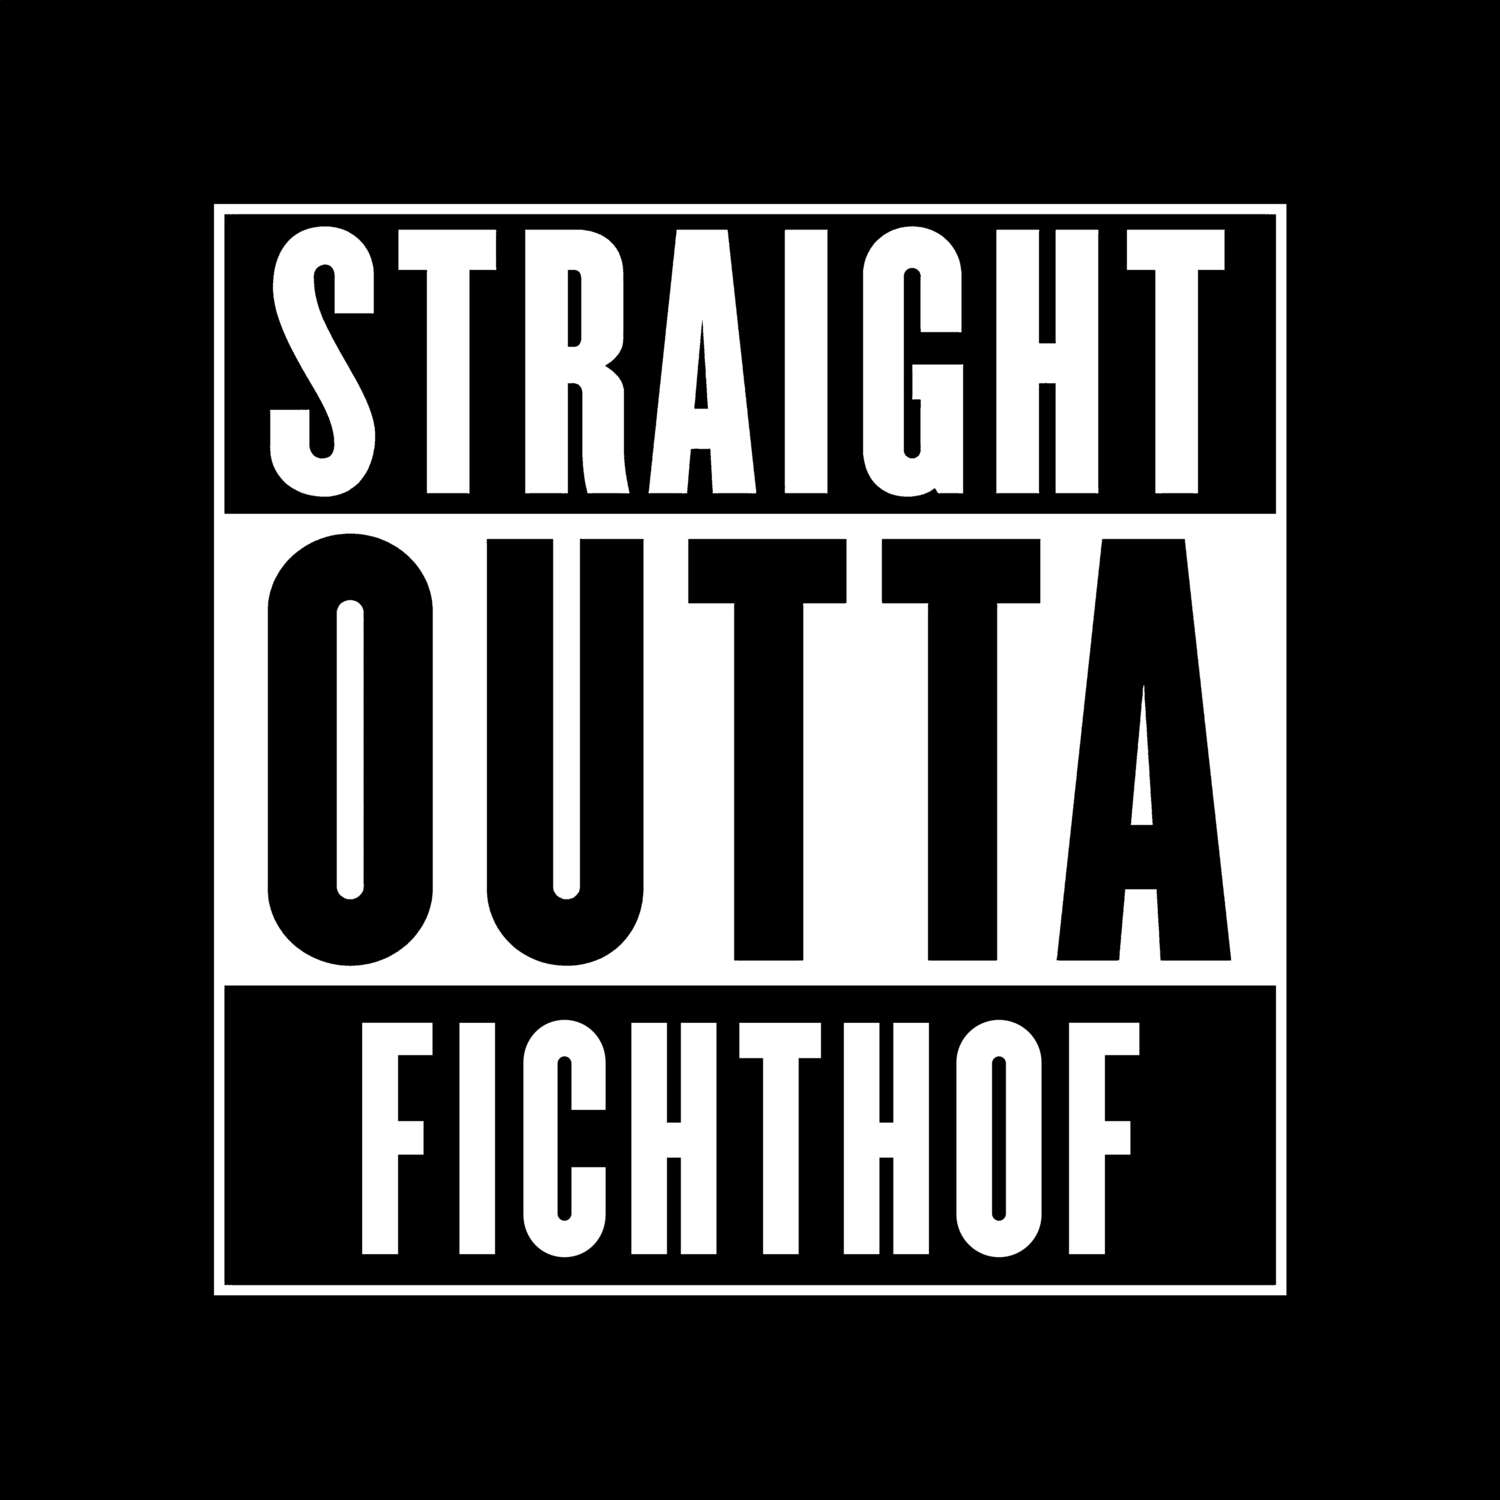 Fichthof T-Shirt »Straight Outta«